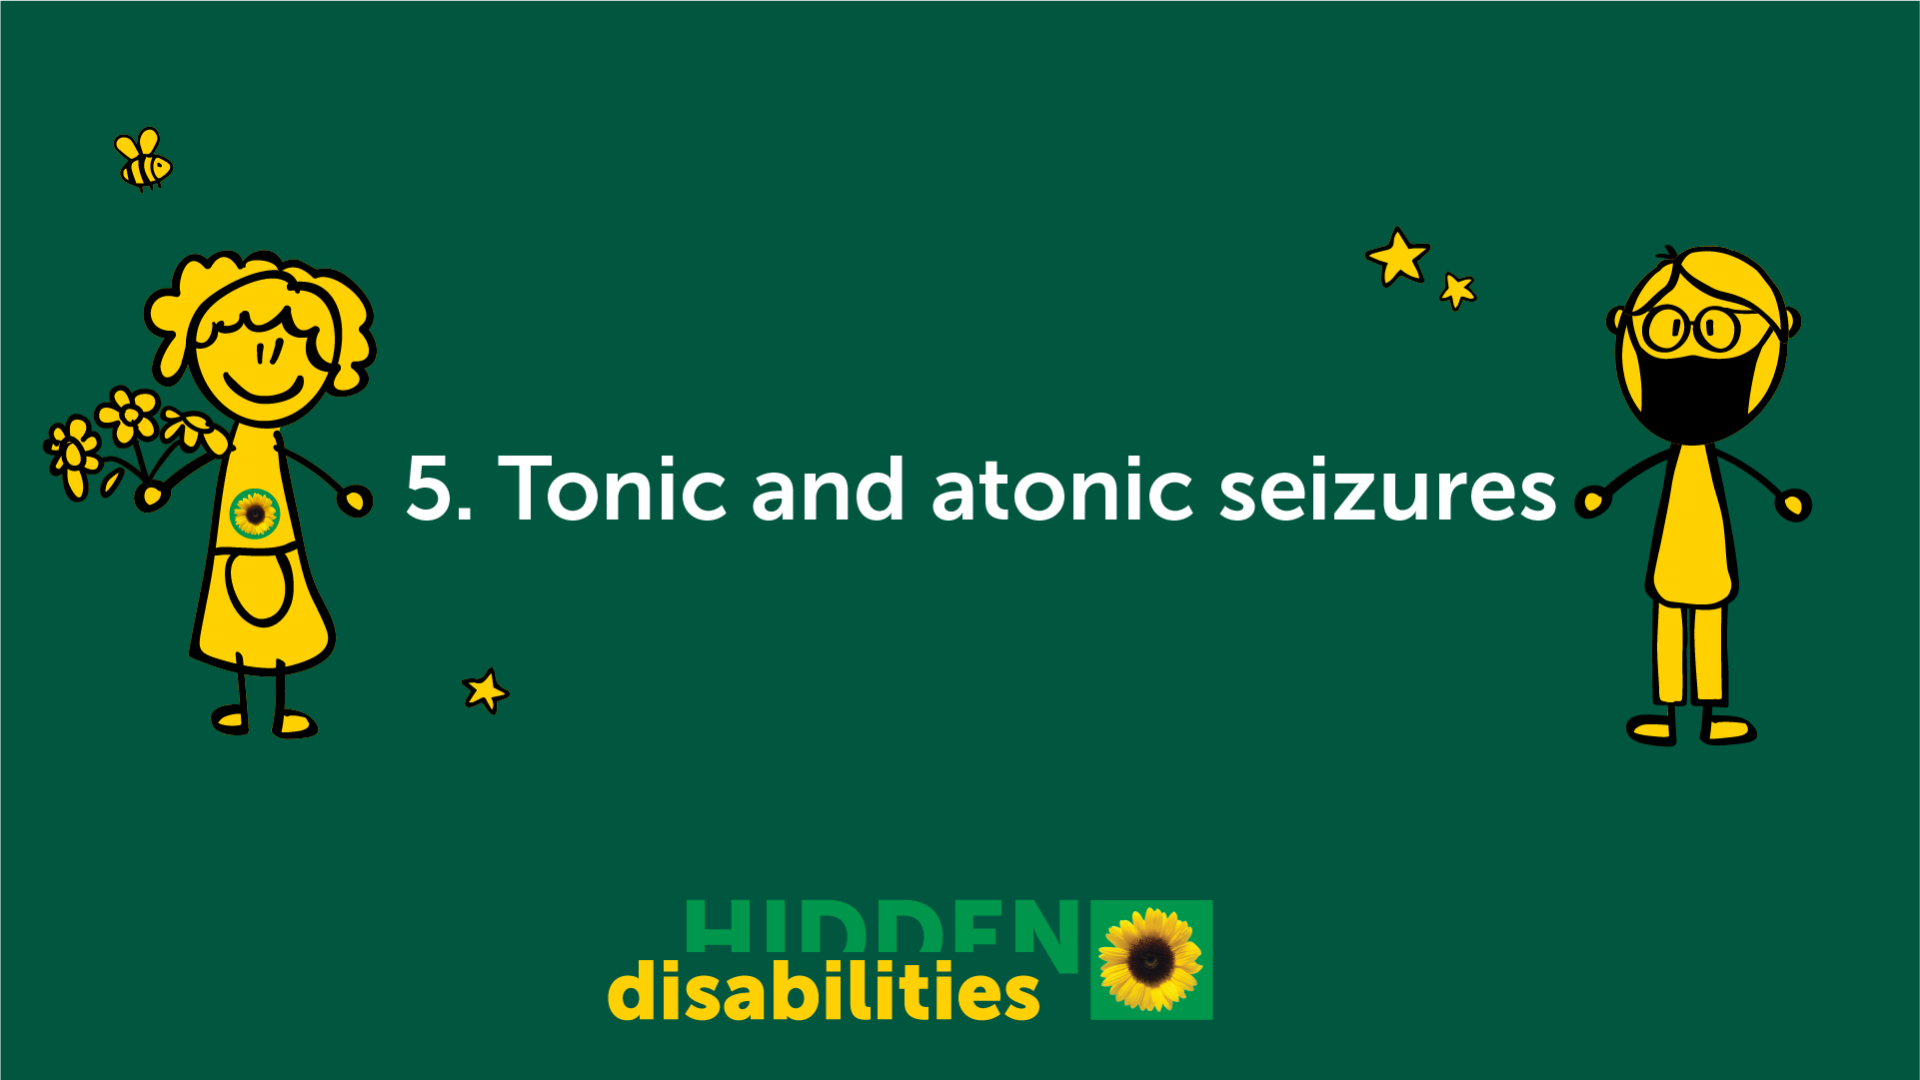 Tonic and atonic seizures